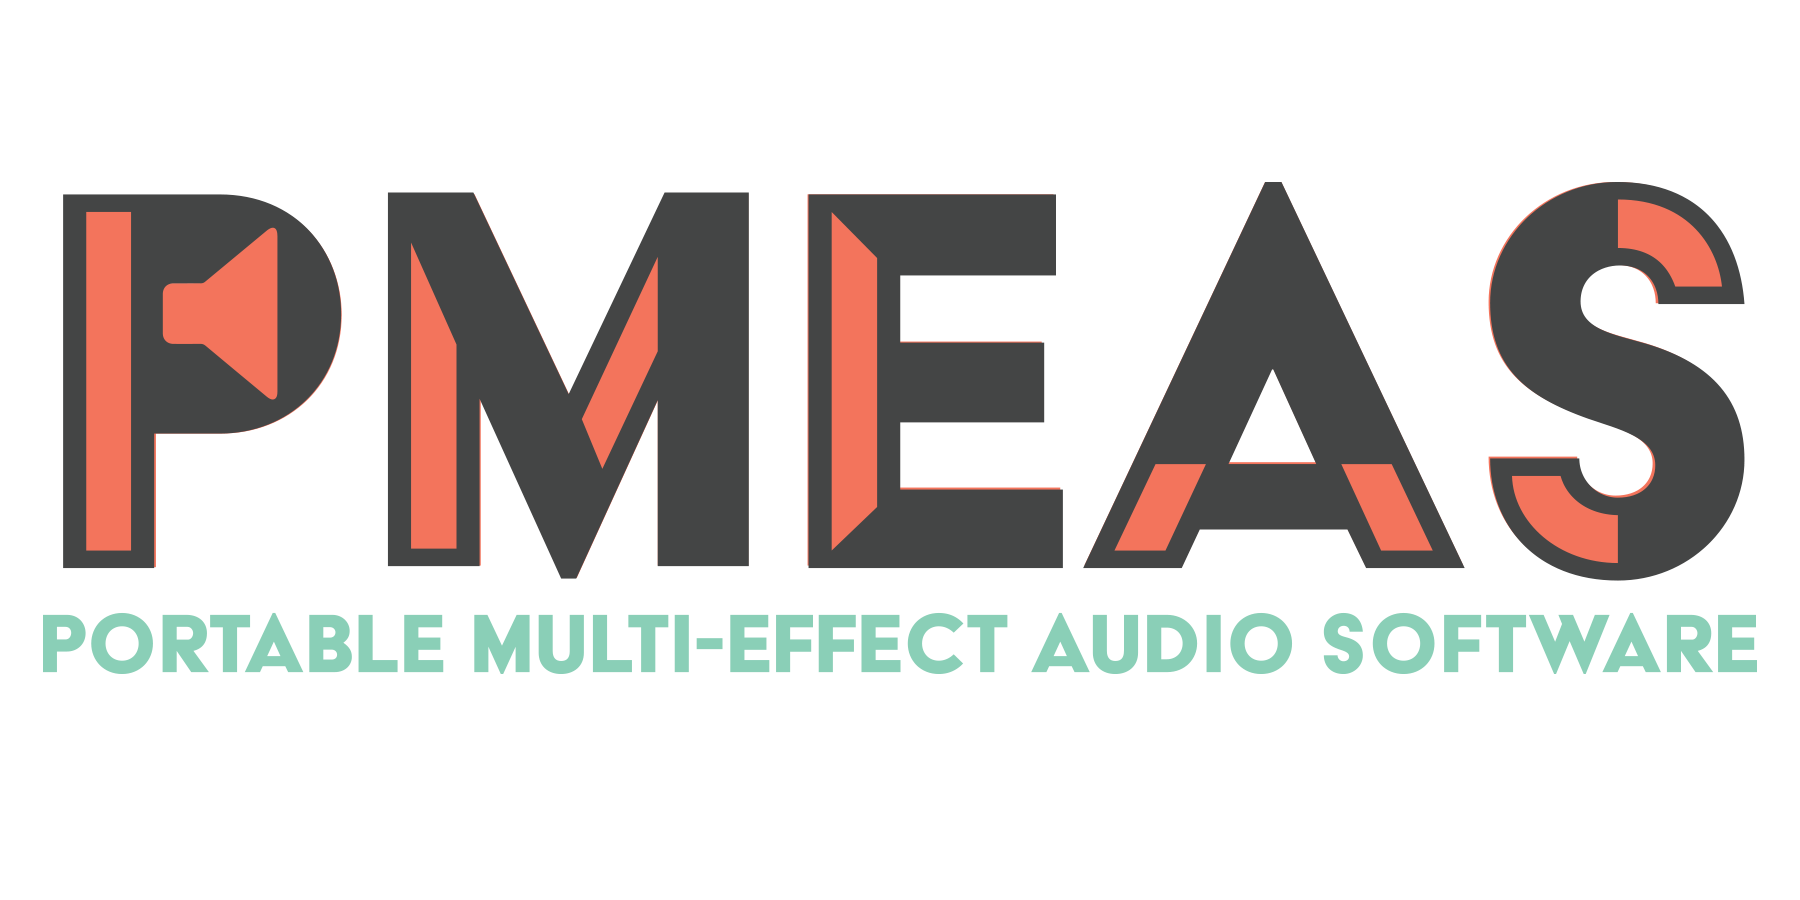 Portable Multi-Effect Audio Software